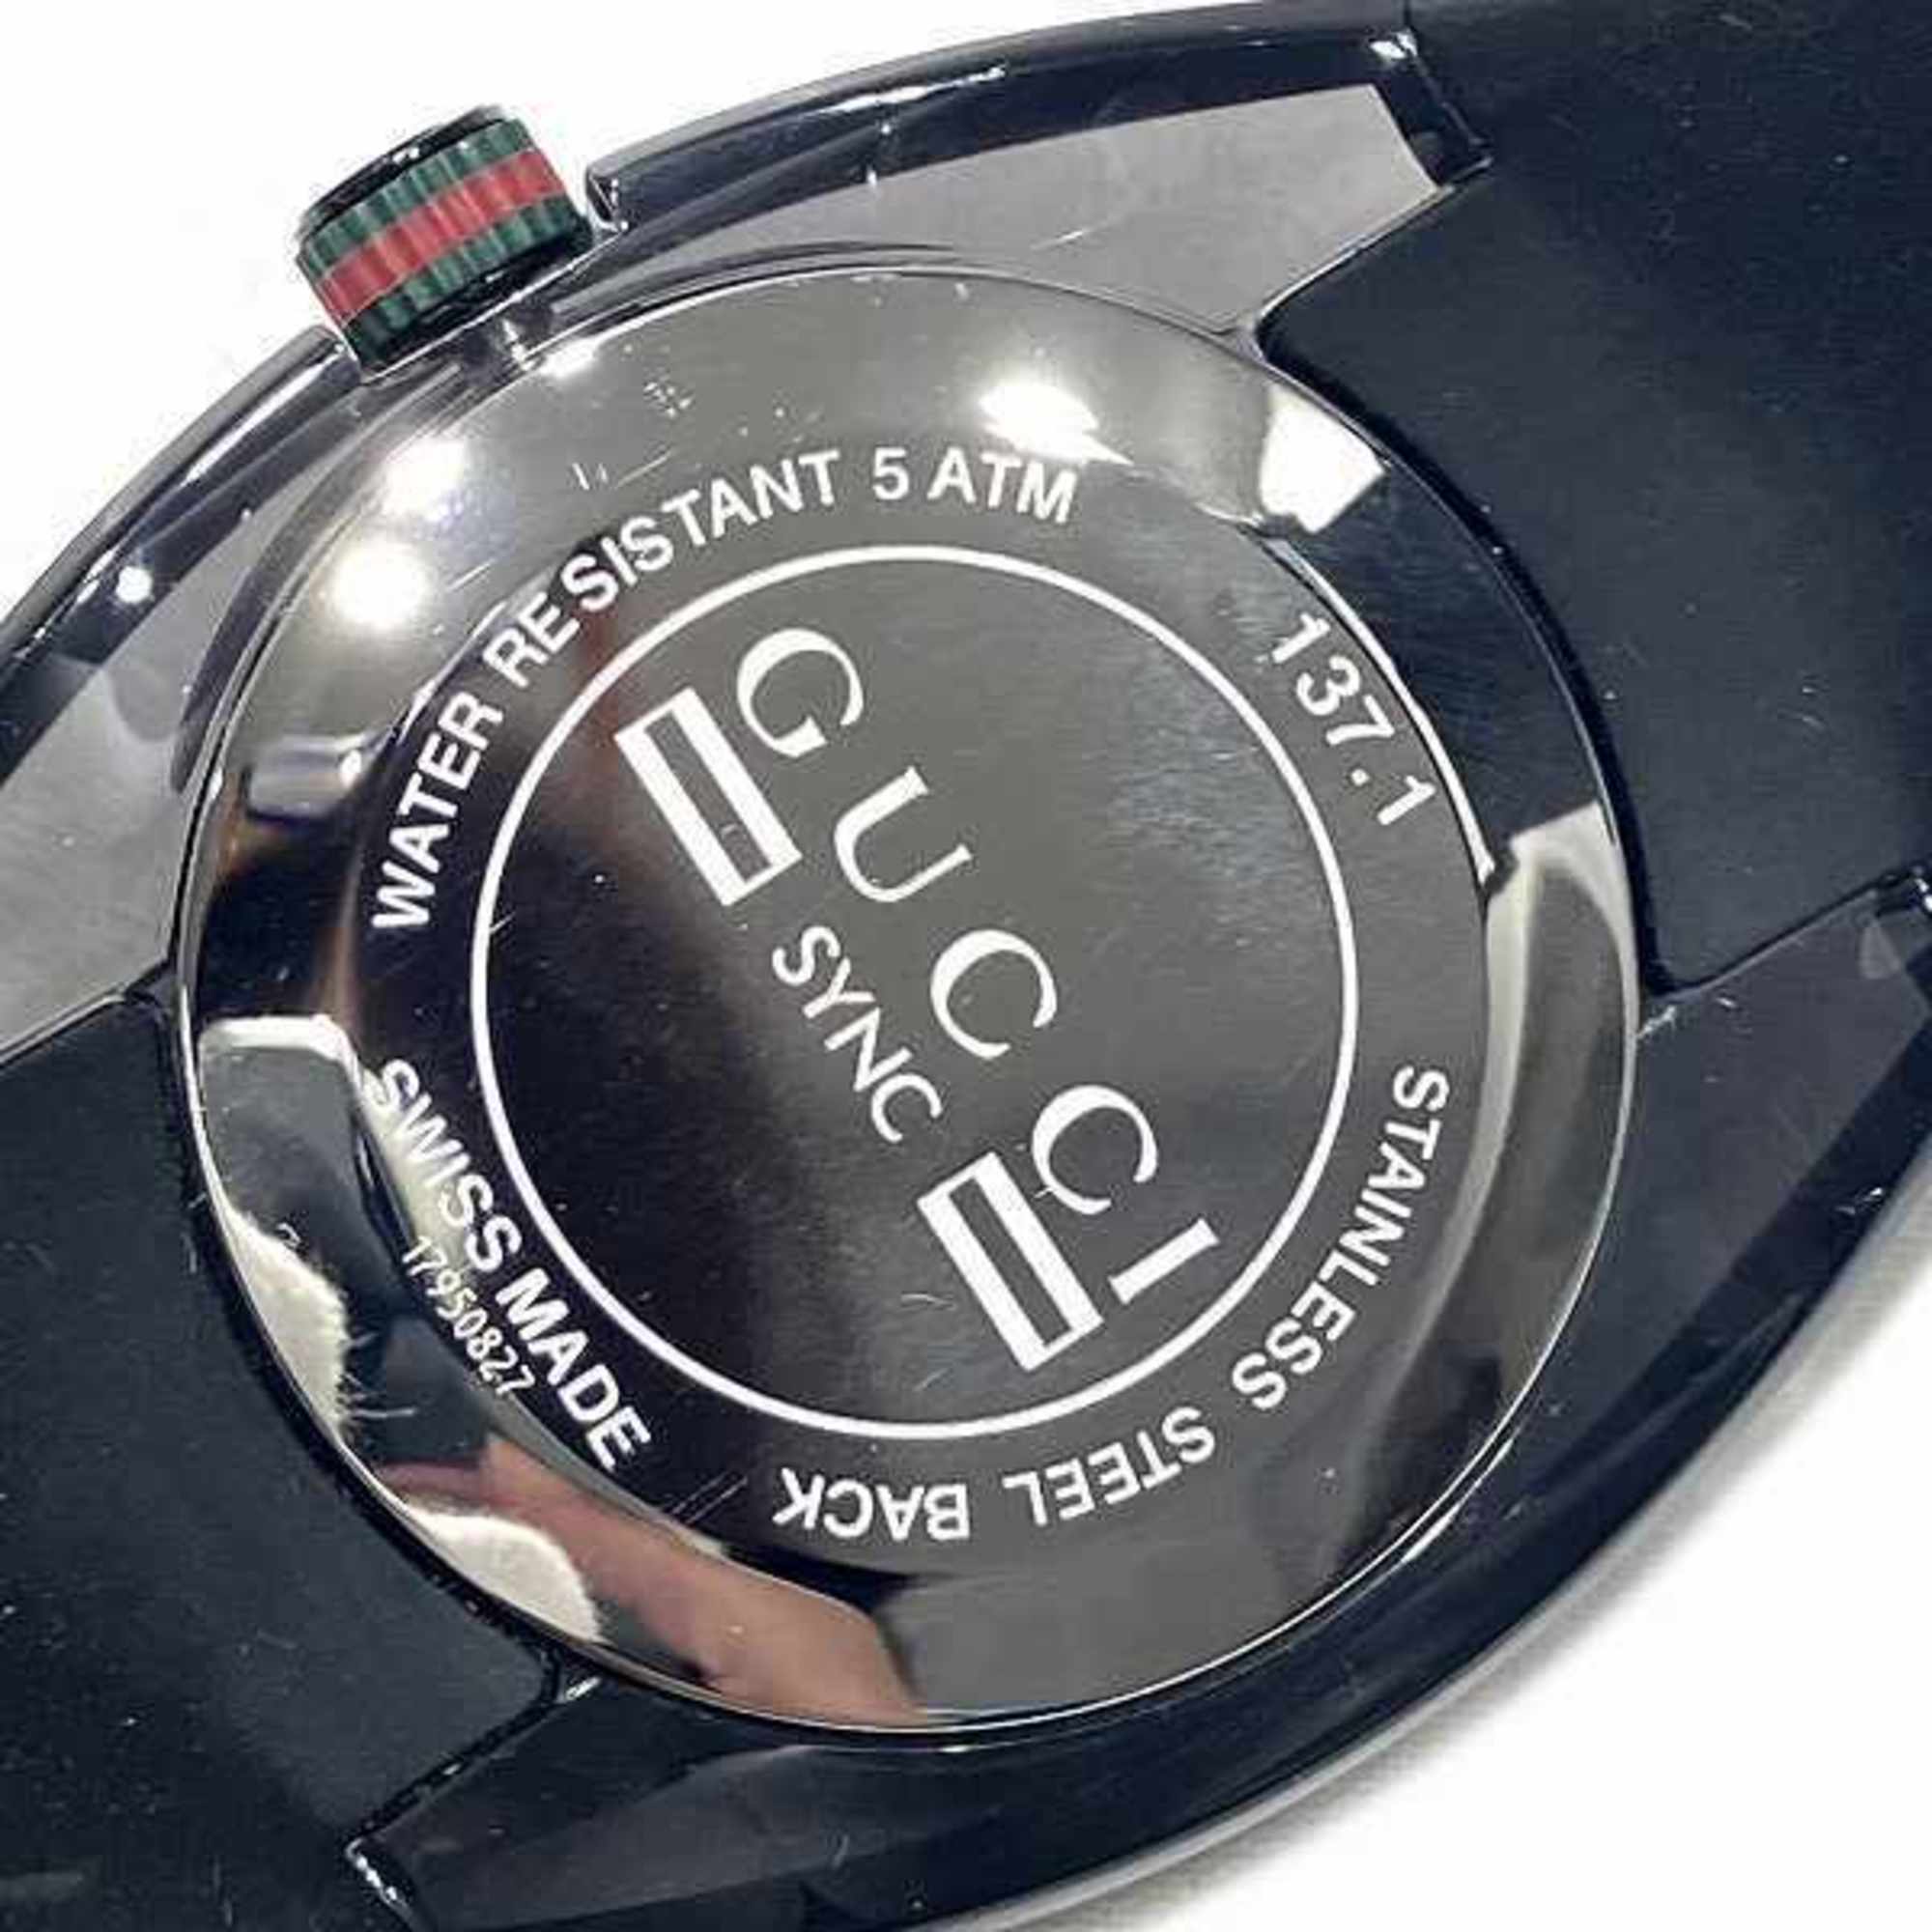 GUCCI sink 137.1 quartz black dial watch men's